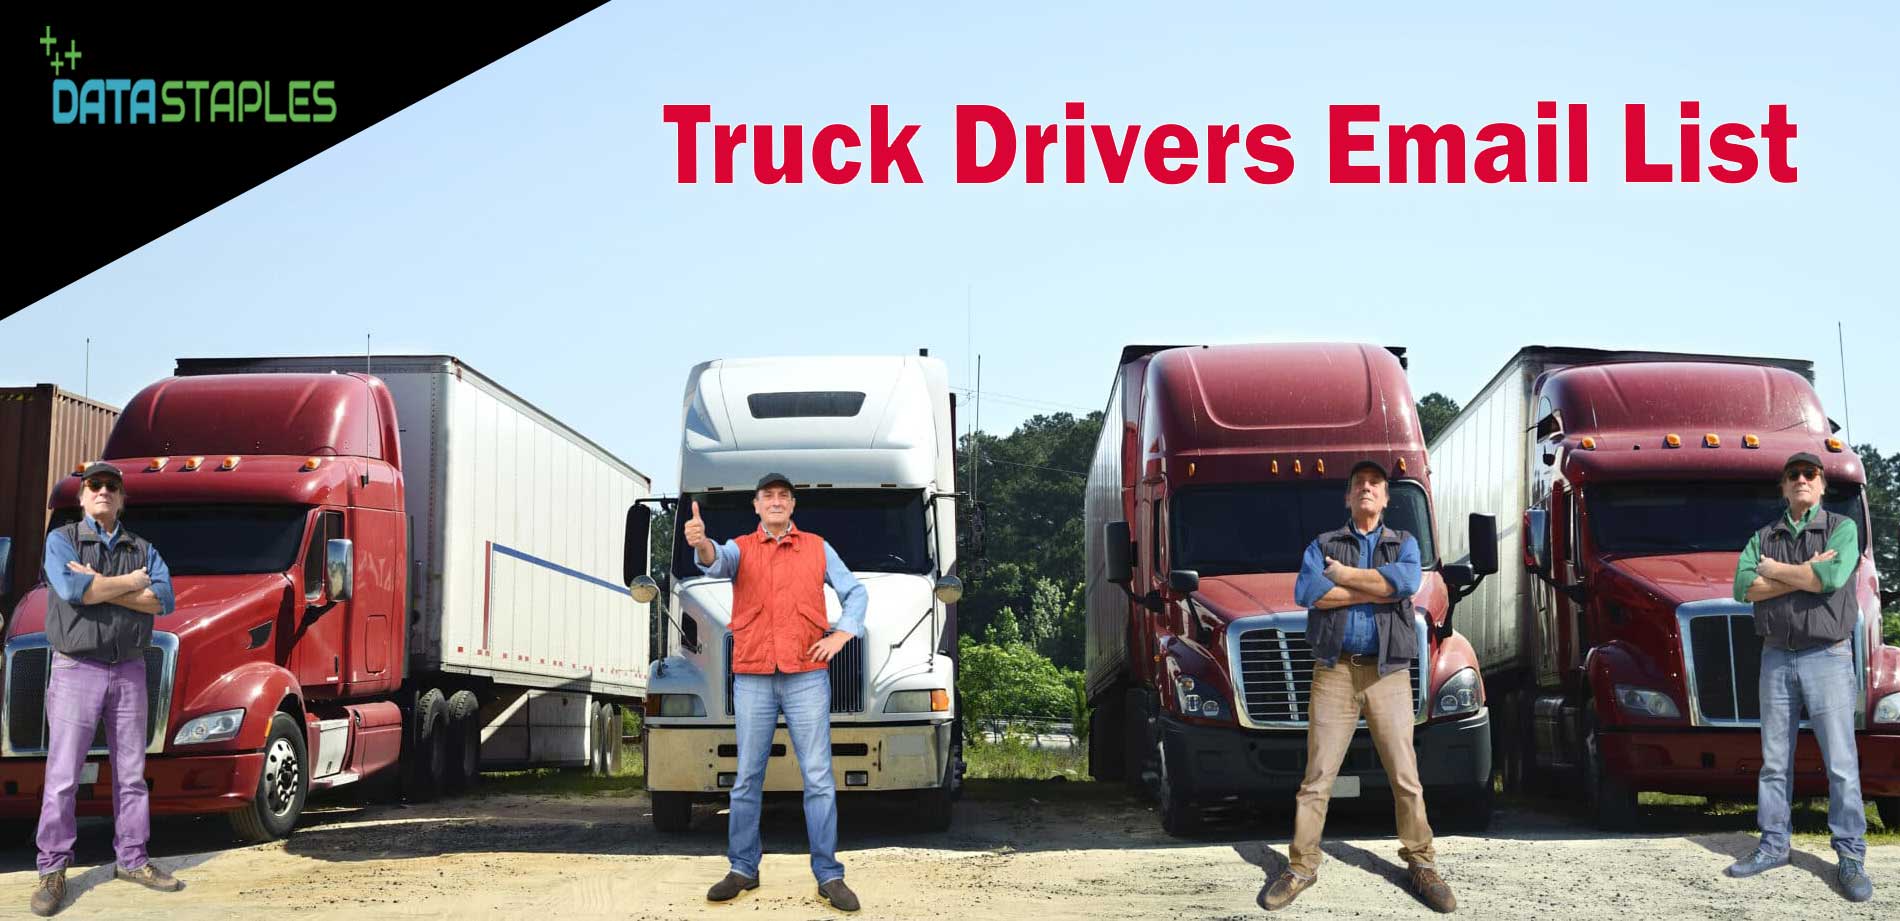 Truck Drivers Email List | DataStaples